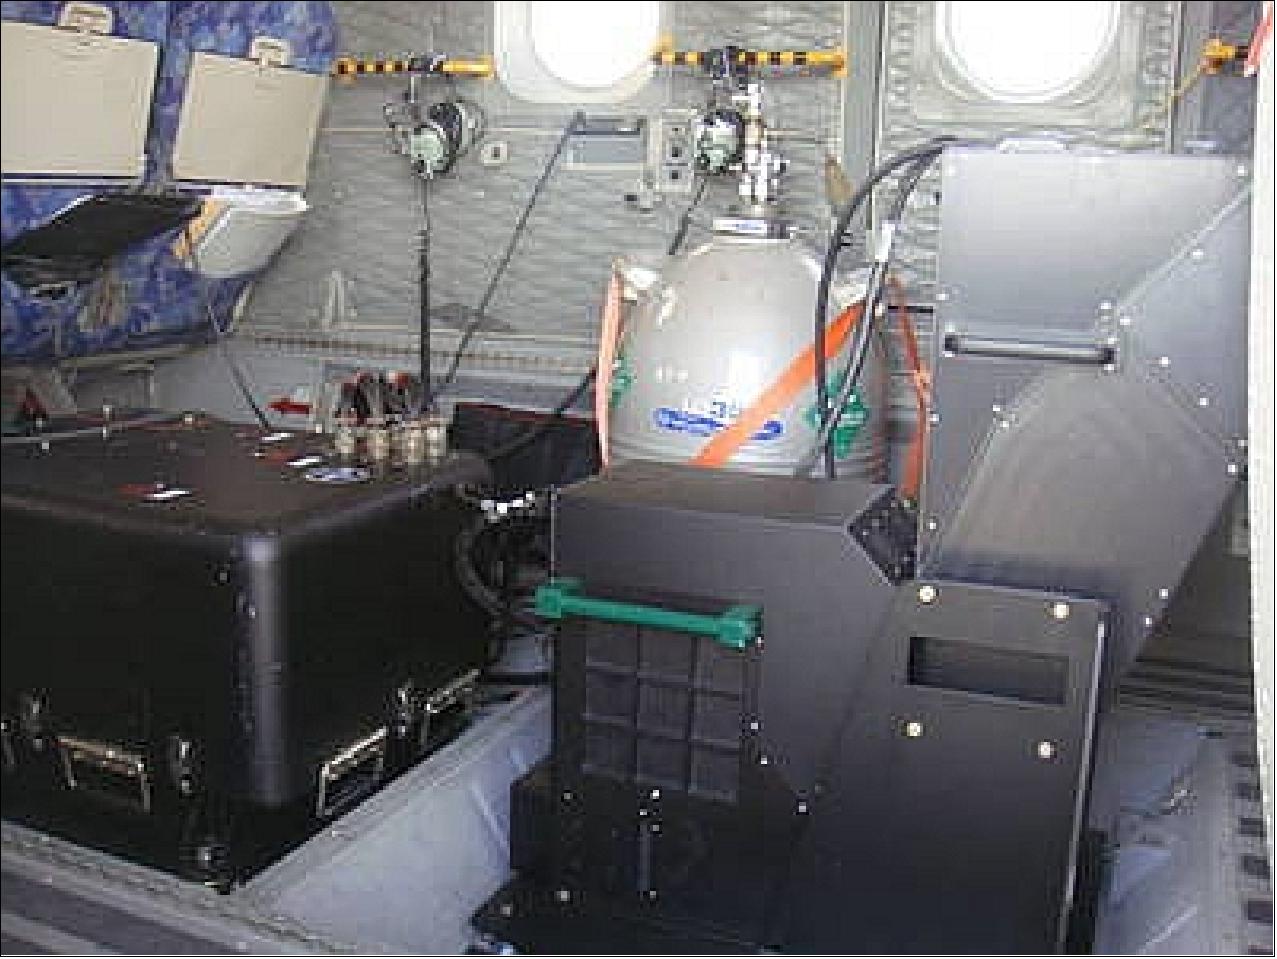 Figure 109: Photo of the CASA aircraft instrumentation (image credit: ESA)